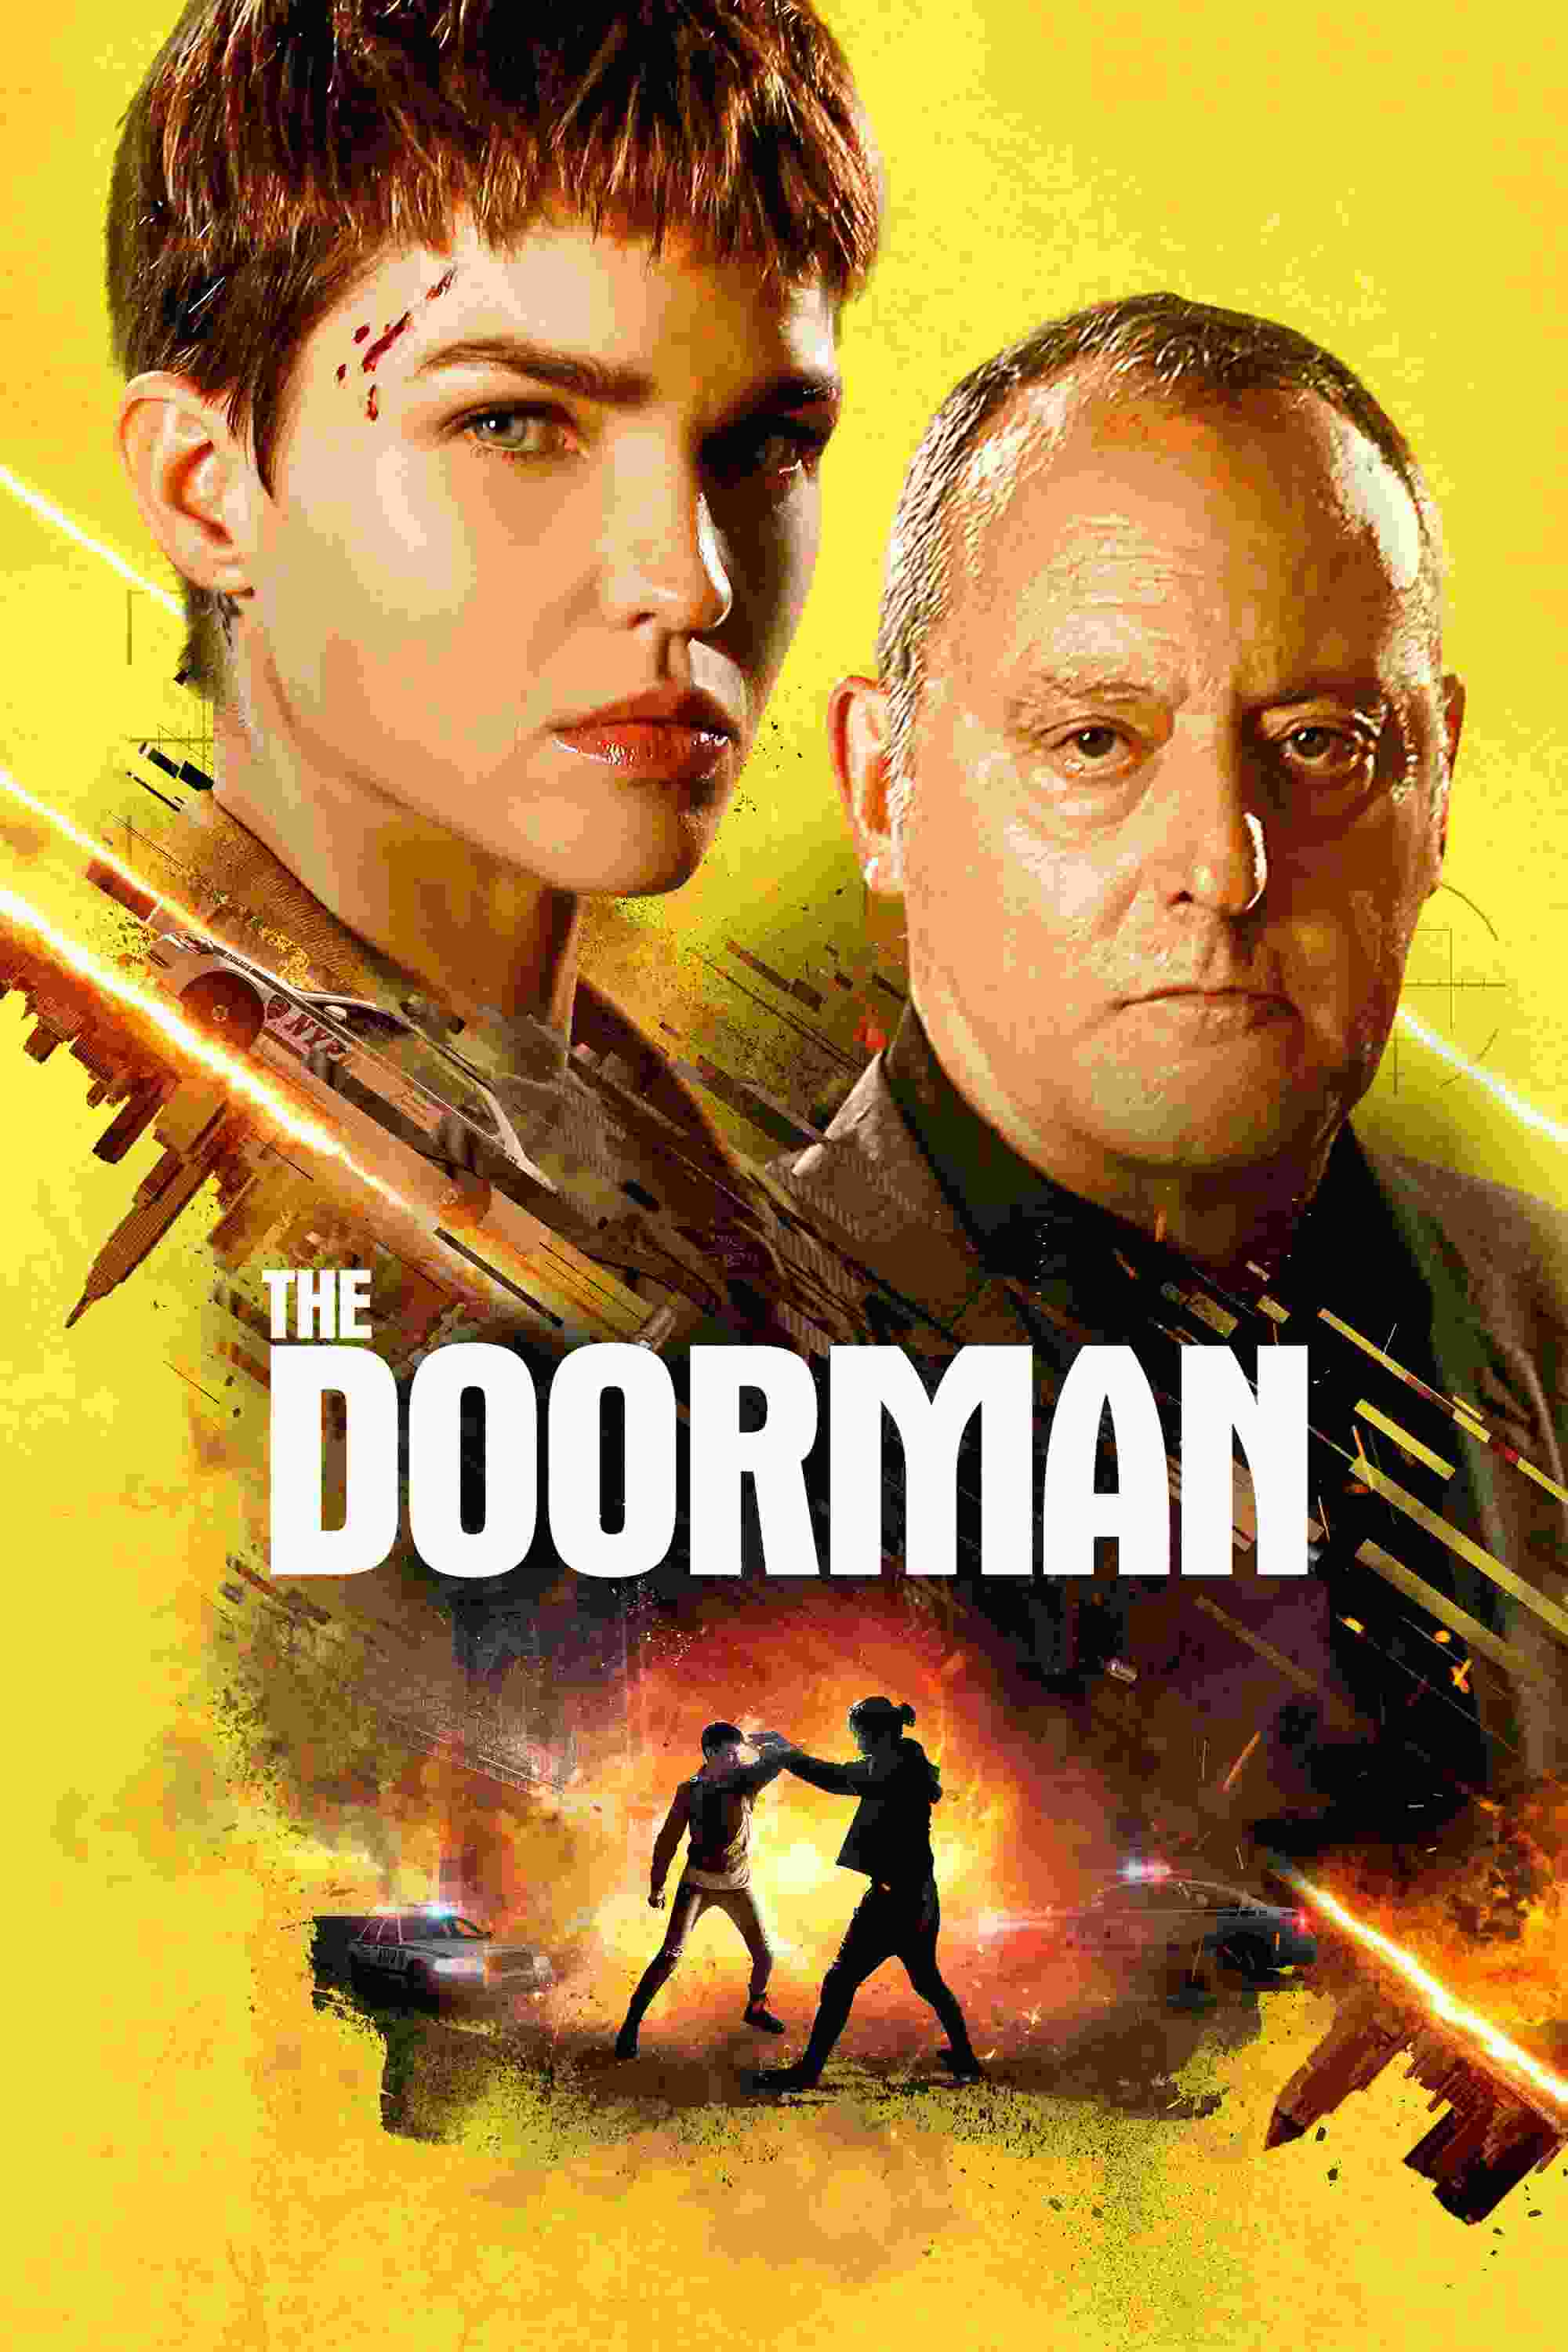 The Doorman (2020) Ruby Rose